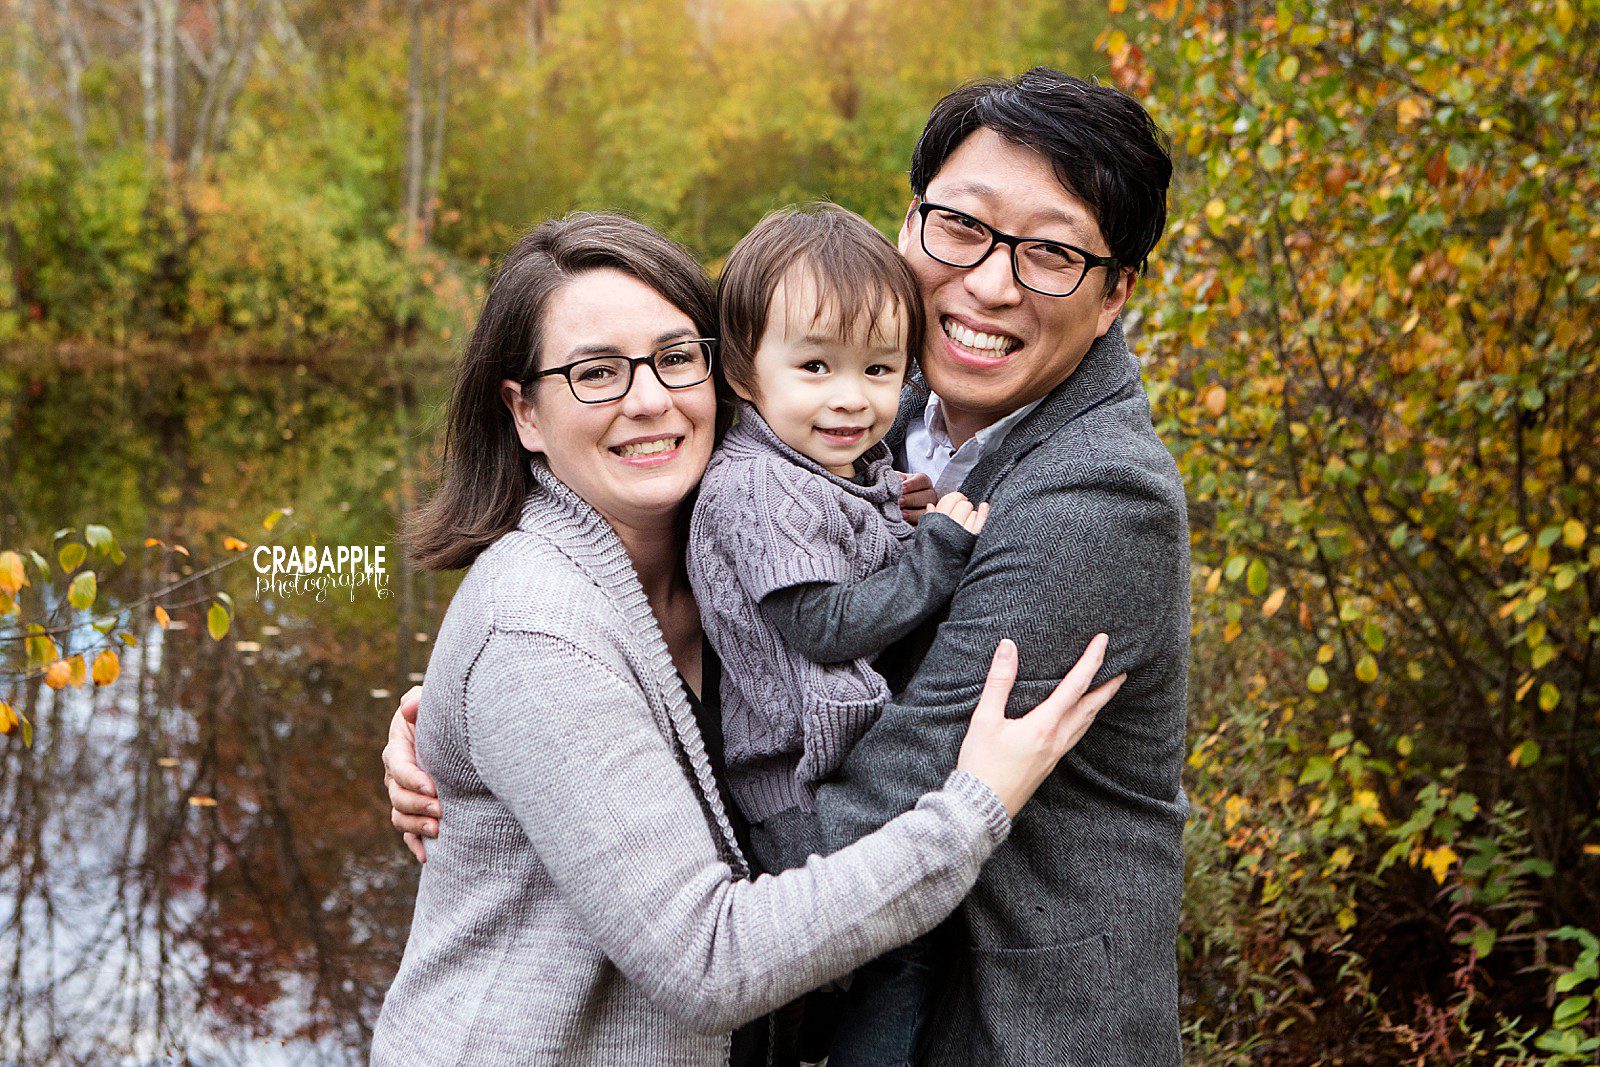 fall family photo styling ideas using gray